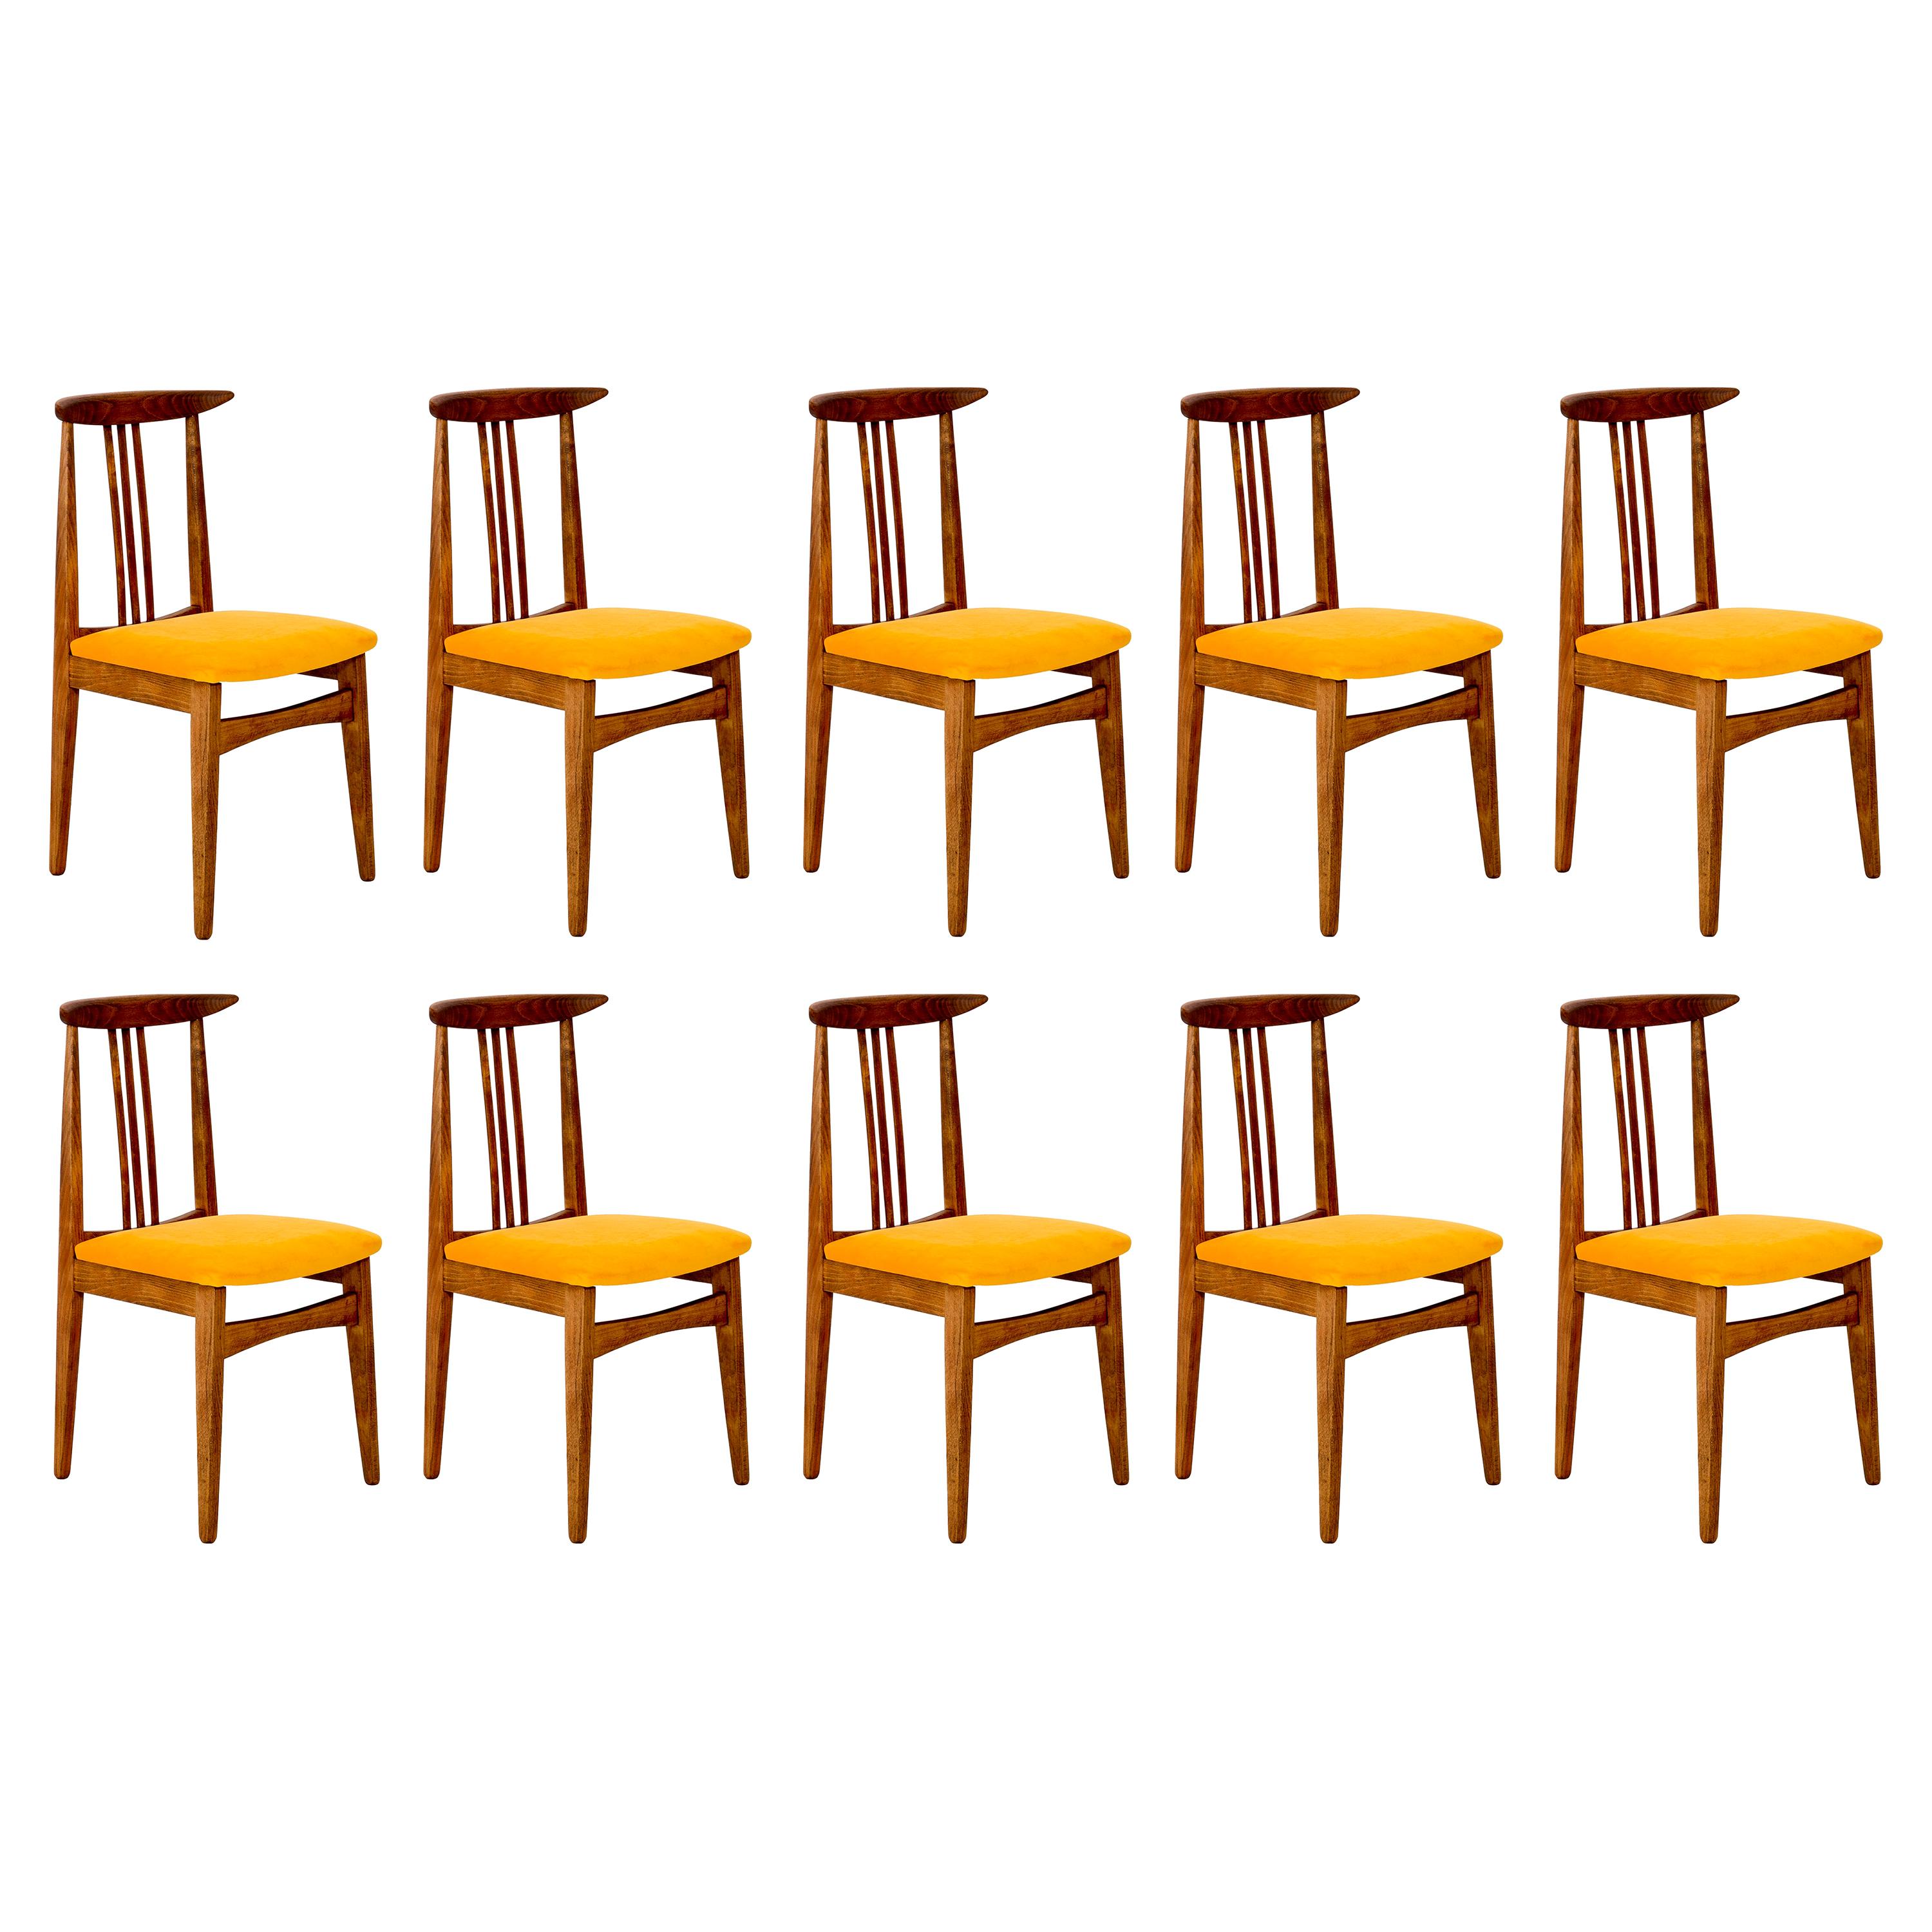 Set of Ten Yellow Chairs, by Zielinski, Europe, 1960s